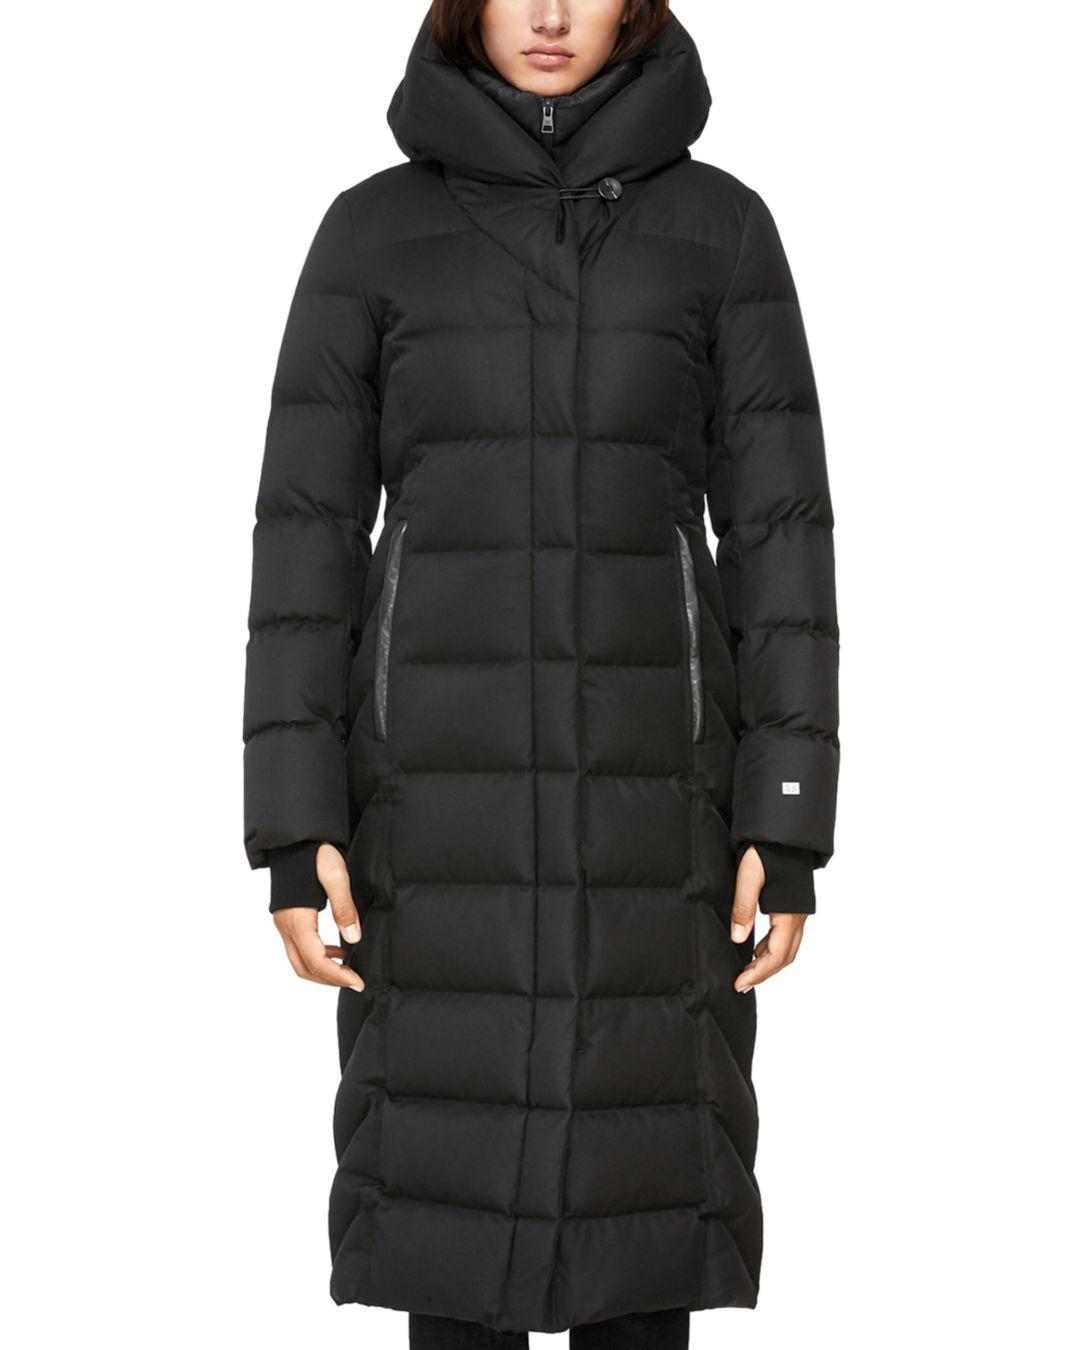 SOIA & KYO Fleece Talyse Maxi Down Coat in Black - Lyst